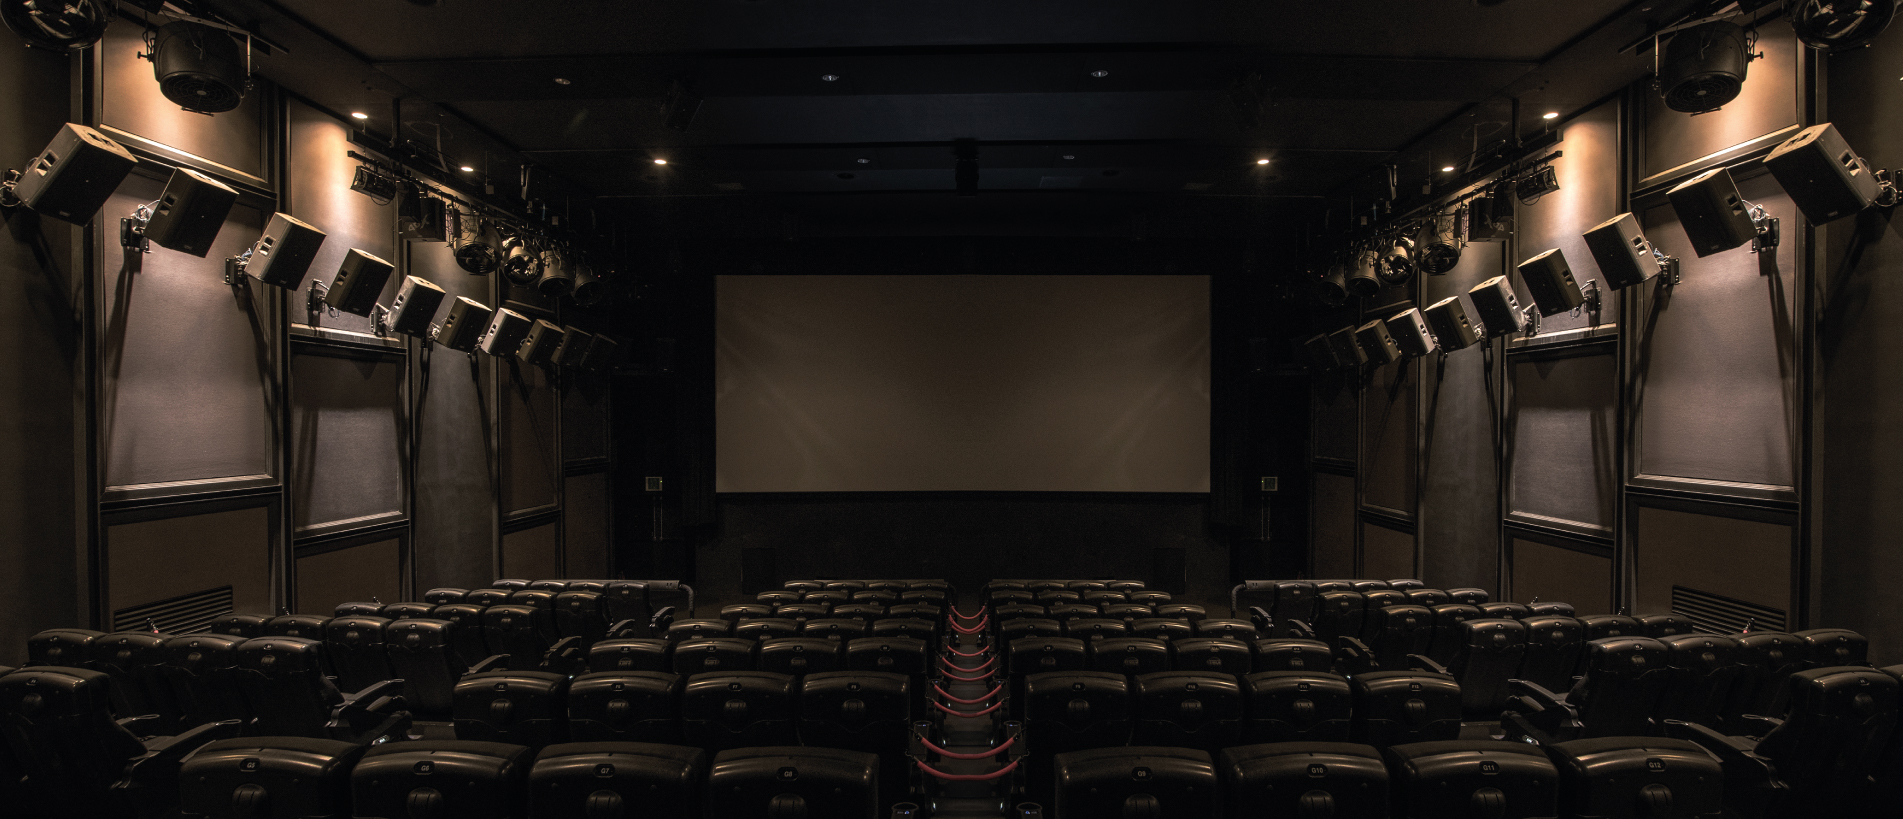 4DX is a 4D film presentation system developed by CJ 4DPlex, a subsidiary of South Korean cinema chain CJ CGV.